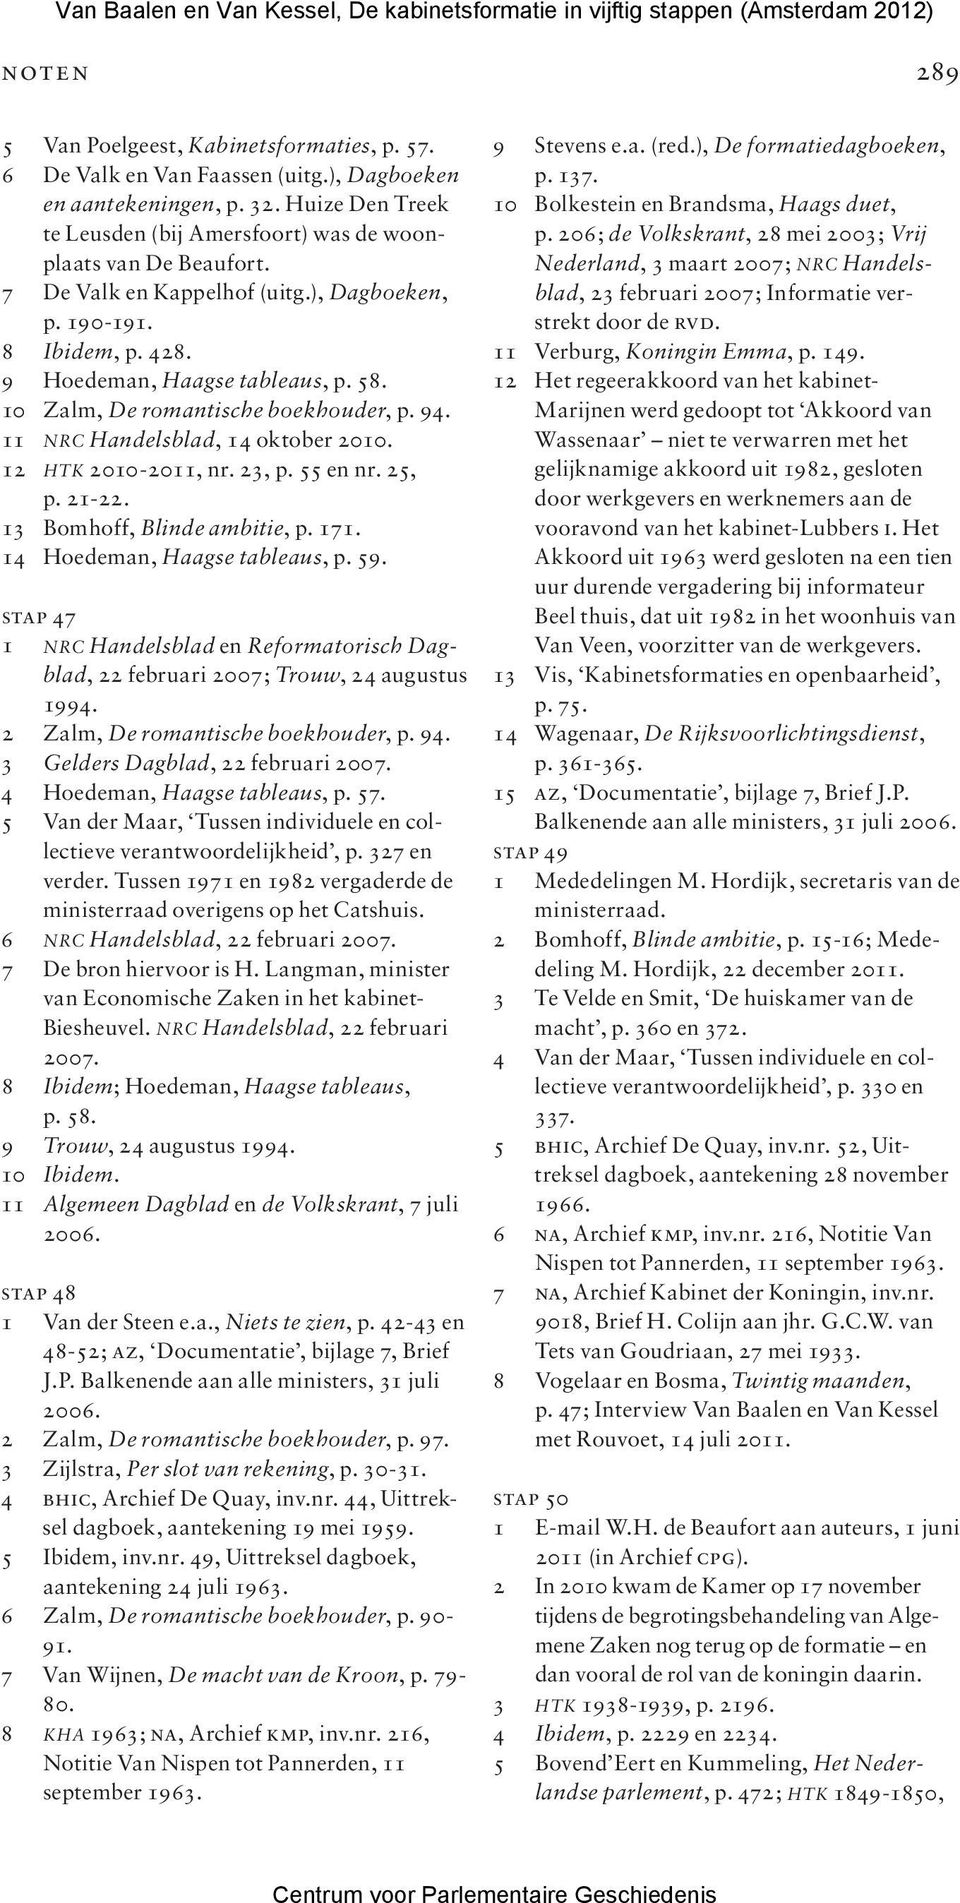 12 htk 2010-2011, nr. 23, p. 55 en nr. 25, p. 21-22. 13 Bomhoff, Blinde ambitie, p. 171. 14 Hoedeman, Haagse tableaus, p. 59.